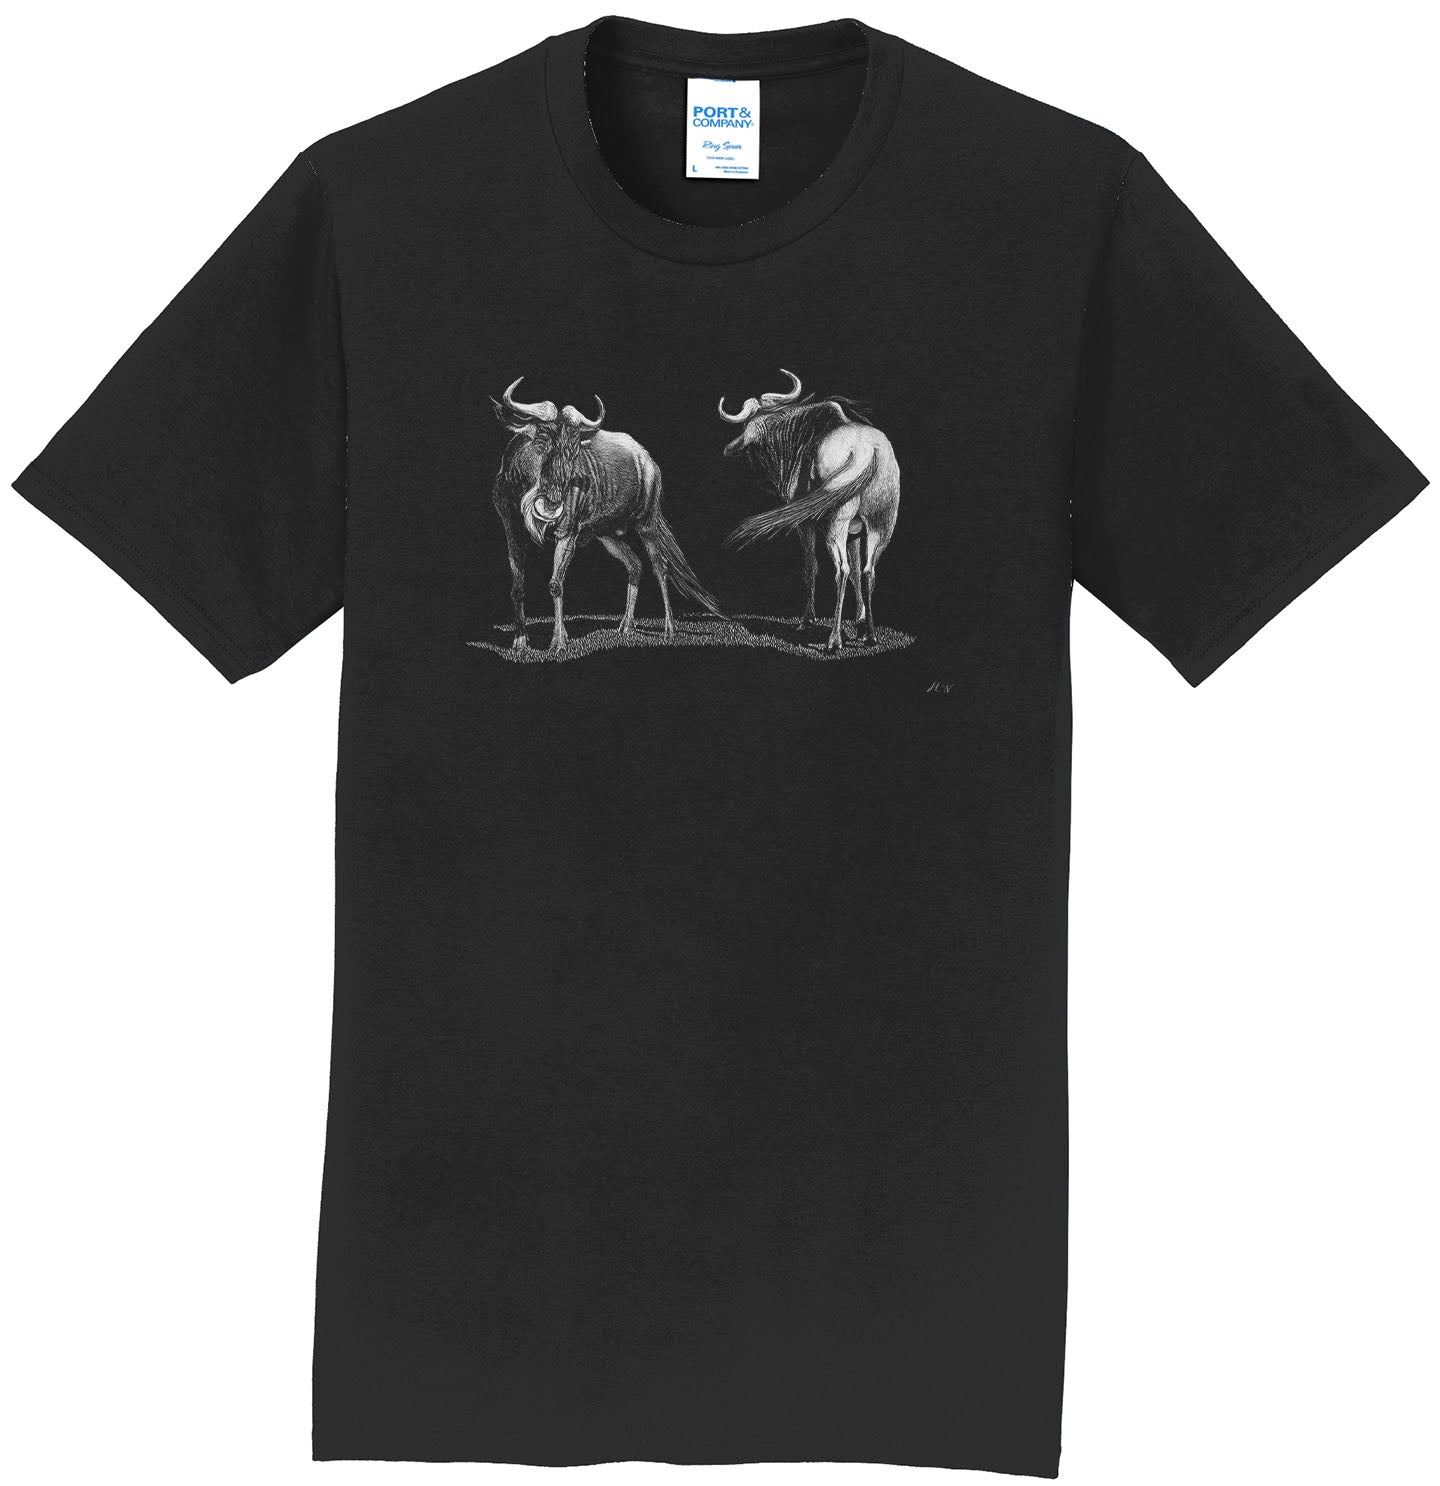 Wildebeest on Black - Adult Unisex T-Shirt